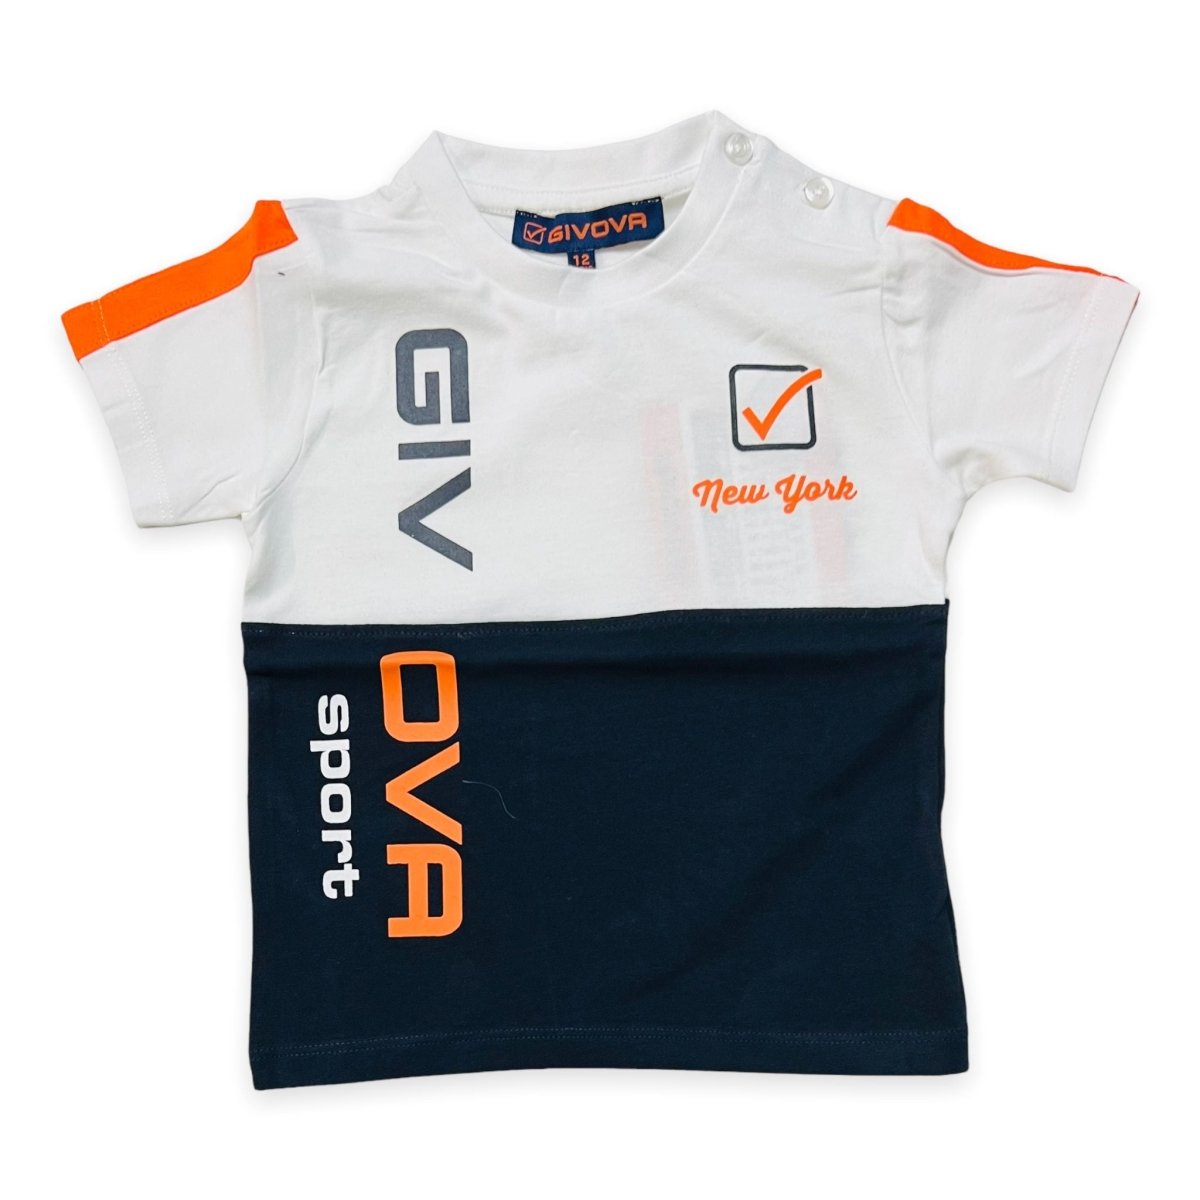 T-Shirt Givova neonato - Mstore016 - T-shirt bimbo - Givova